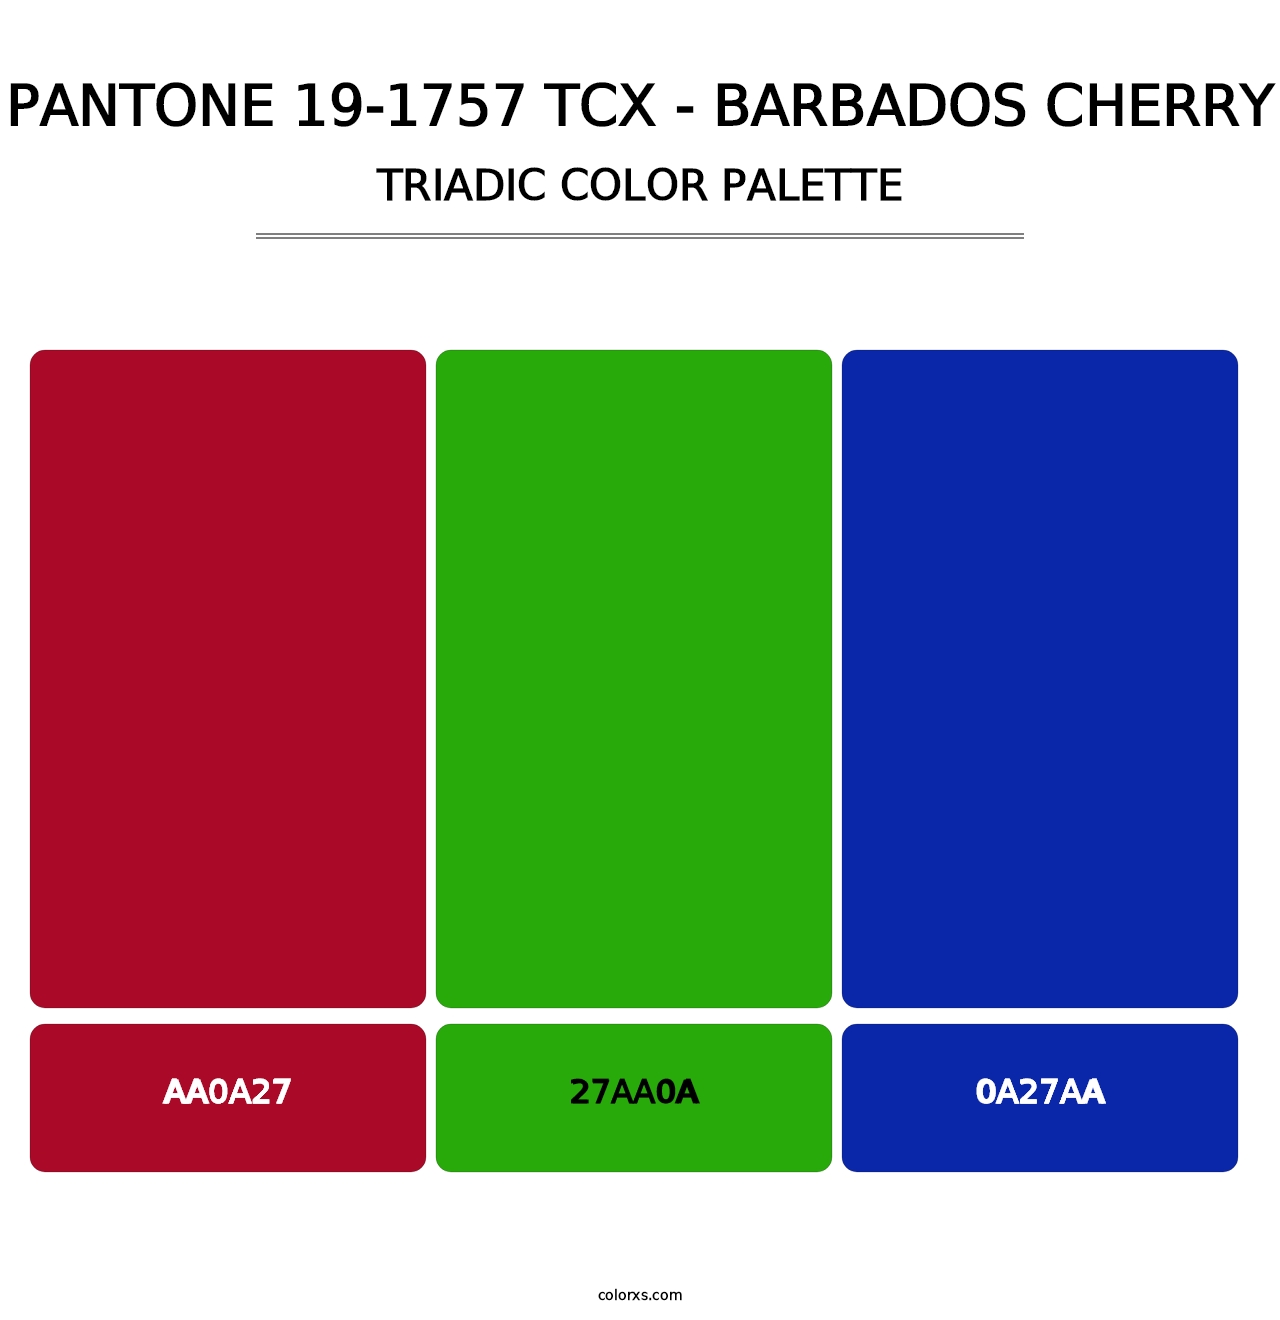 PANTONE 19-1757 TCX - Barbados Cherry - Triadic Color Palette